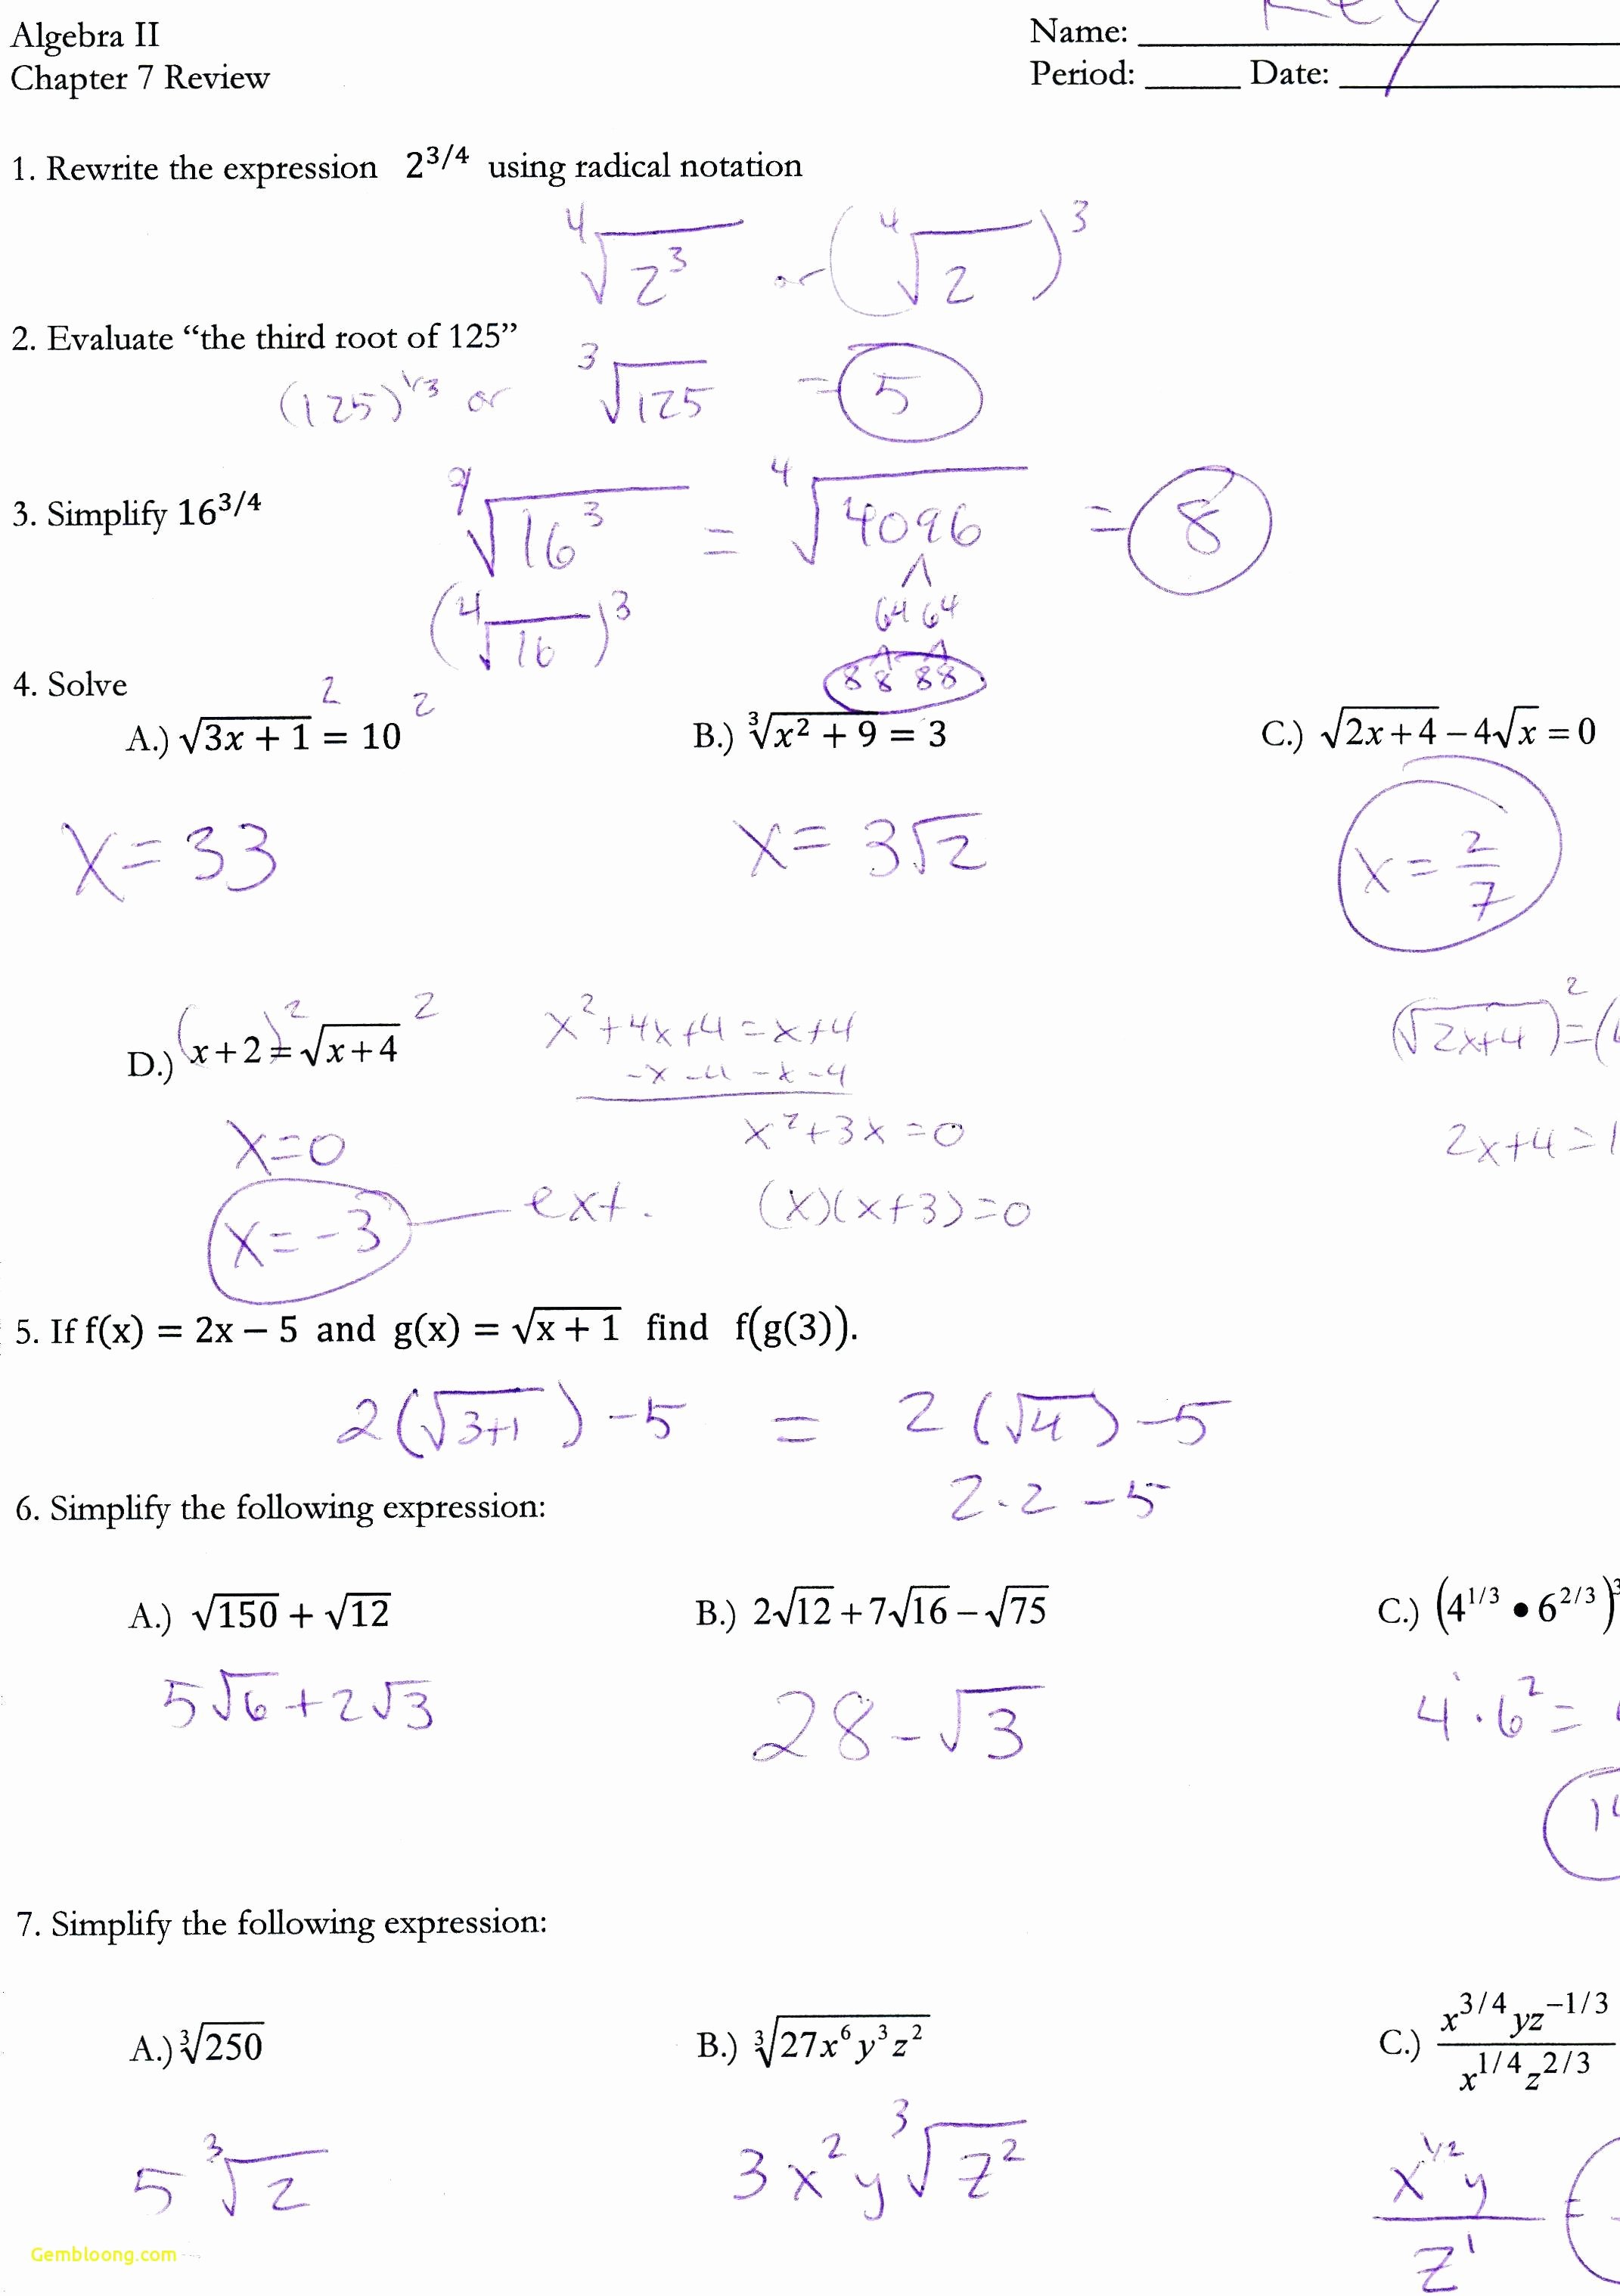 Graphing Quadratics Review Worksheet Inspirational Graphing Quadratics Review Worksheet Answers